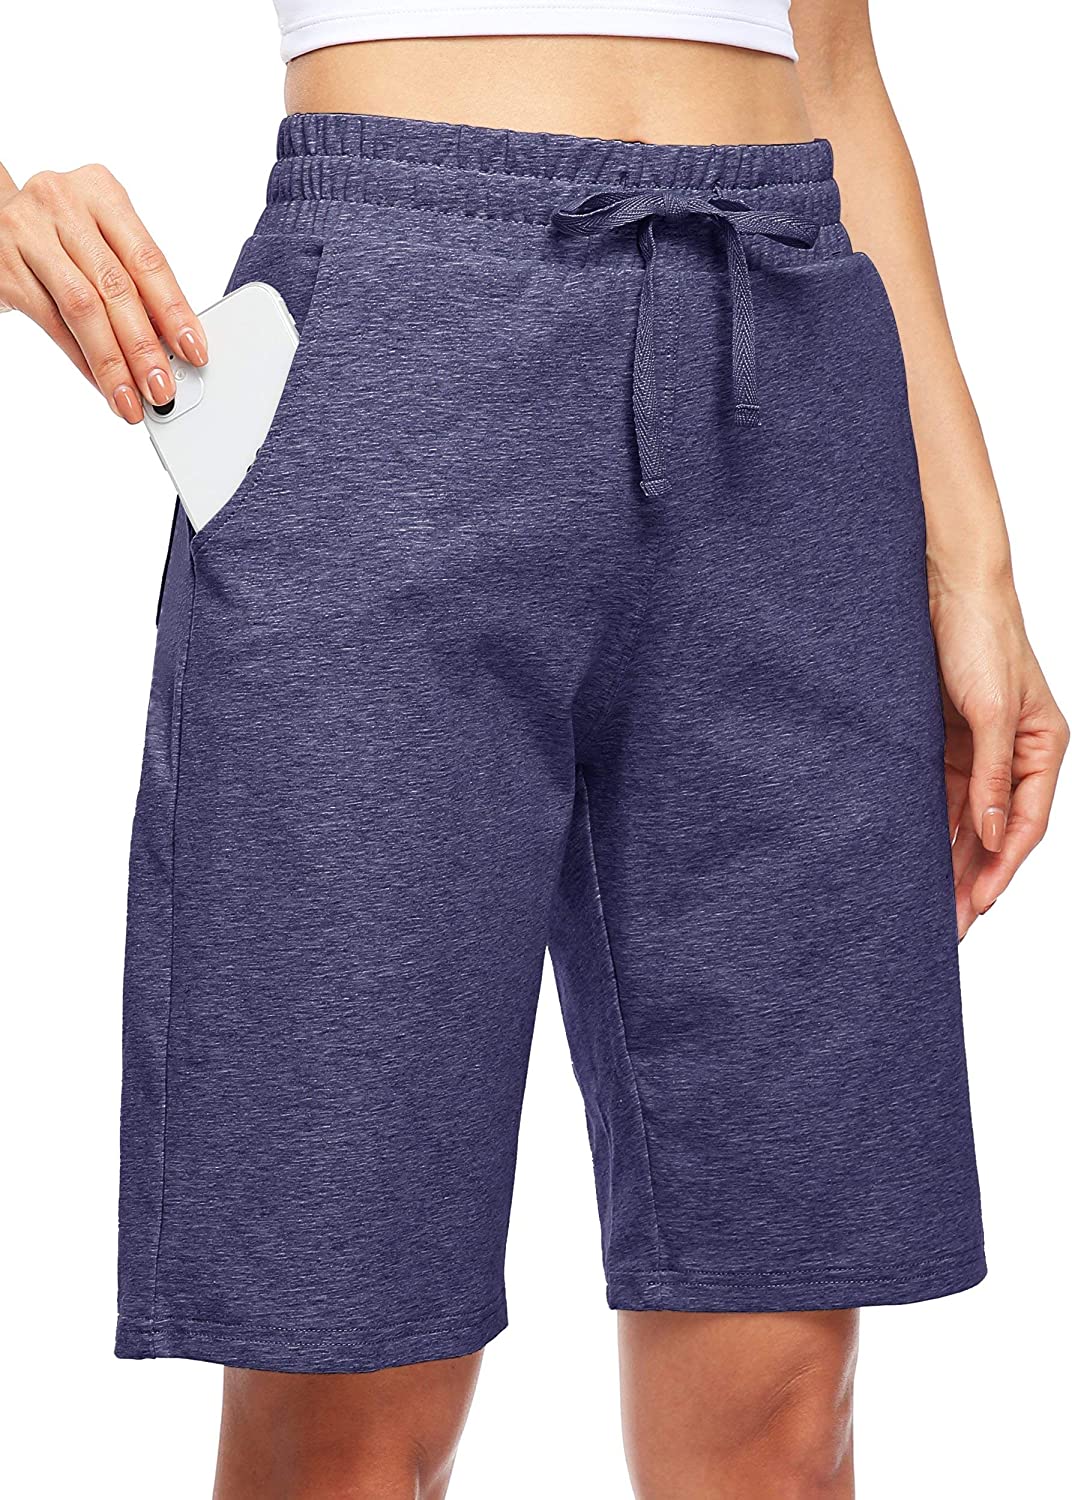 Willit Mens 10 Cotton Lounge Shorts Long Athletic Workout Yoga Sweat Shorts Casual Pajama Bermuda Shorts with Pockets 